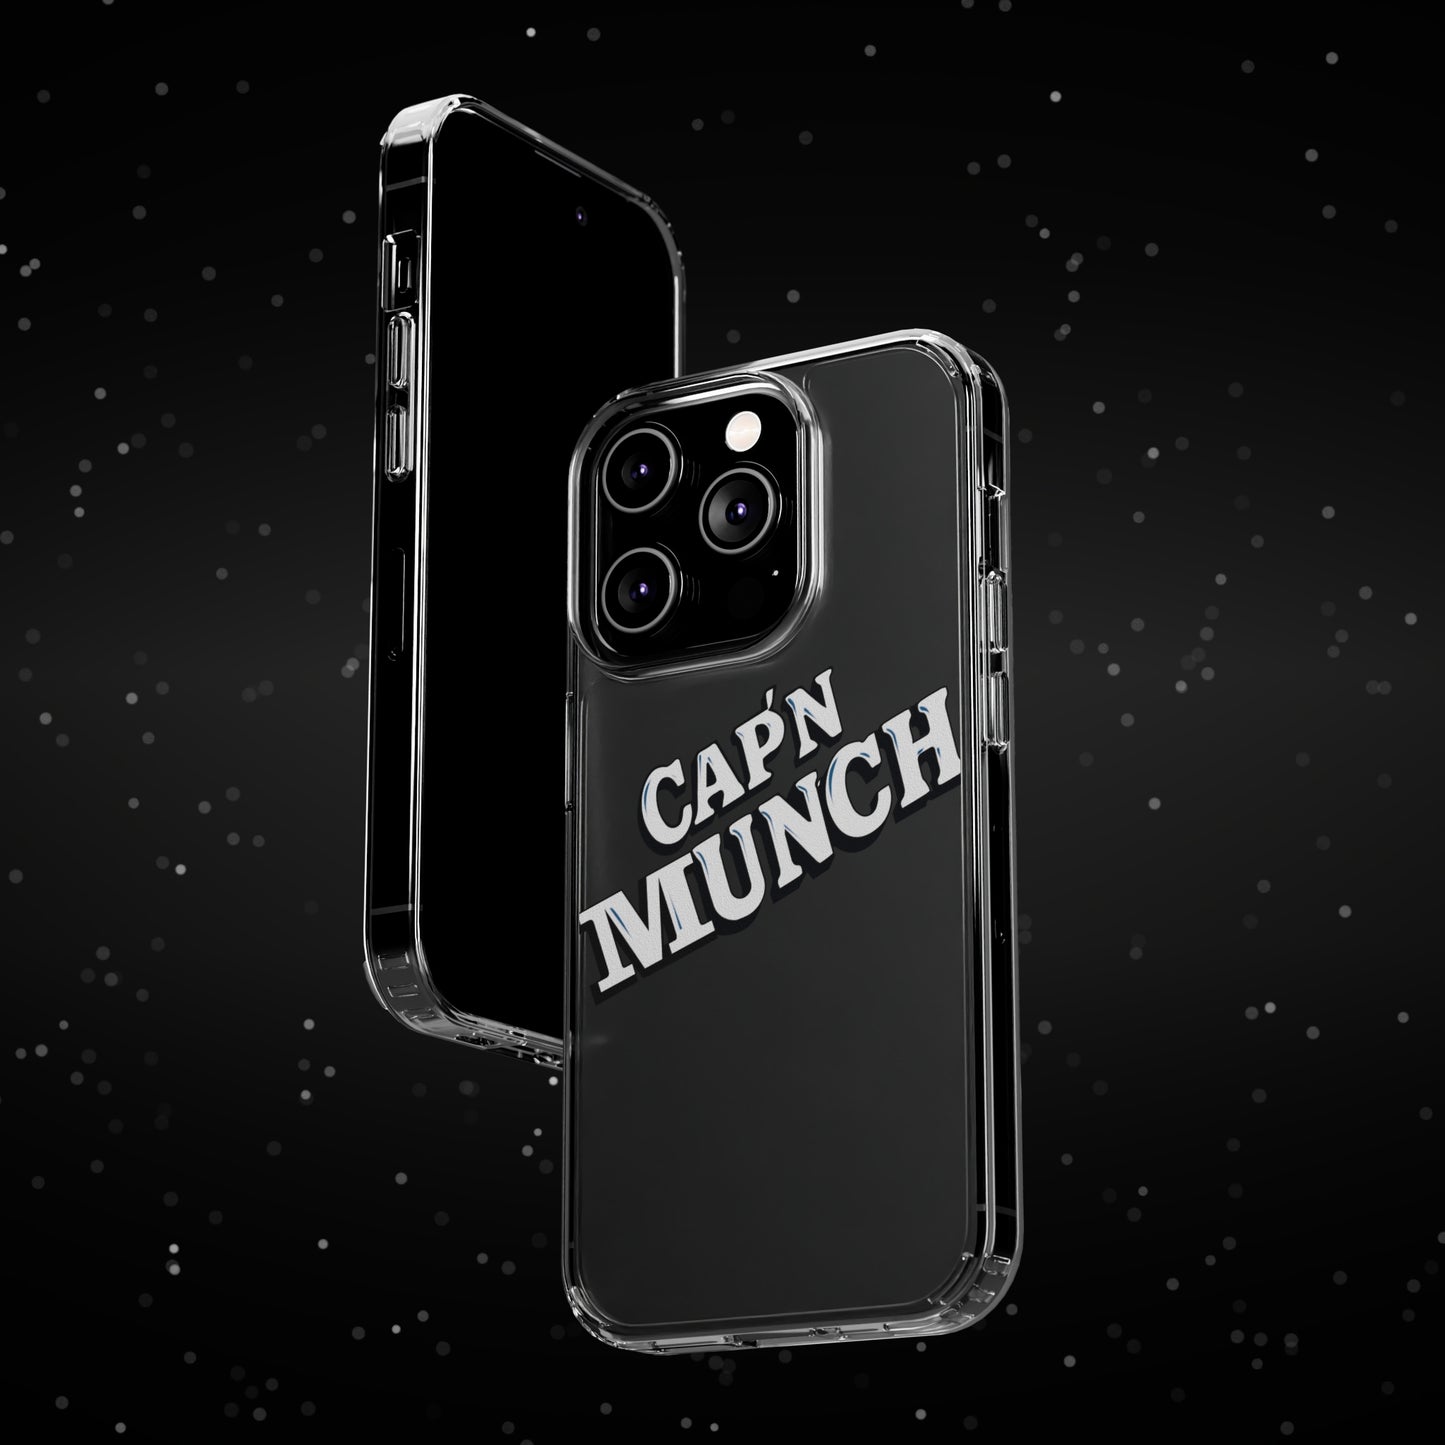 Cap'n Munch iPhone Case